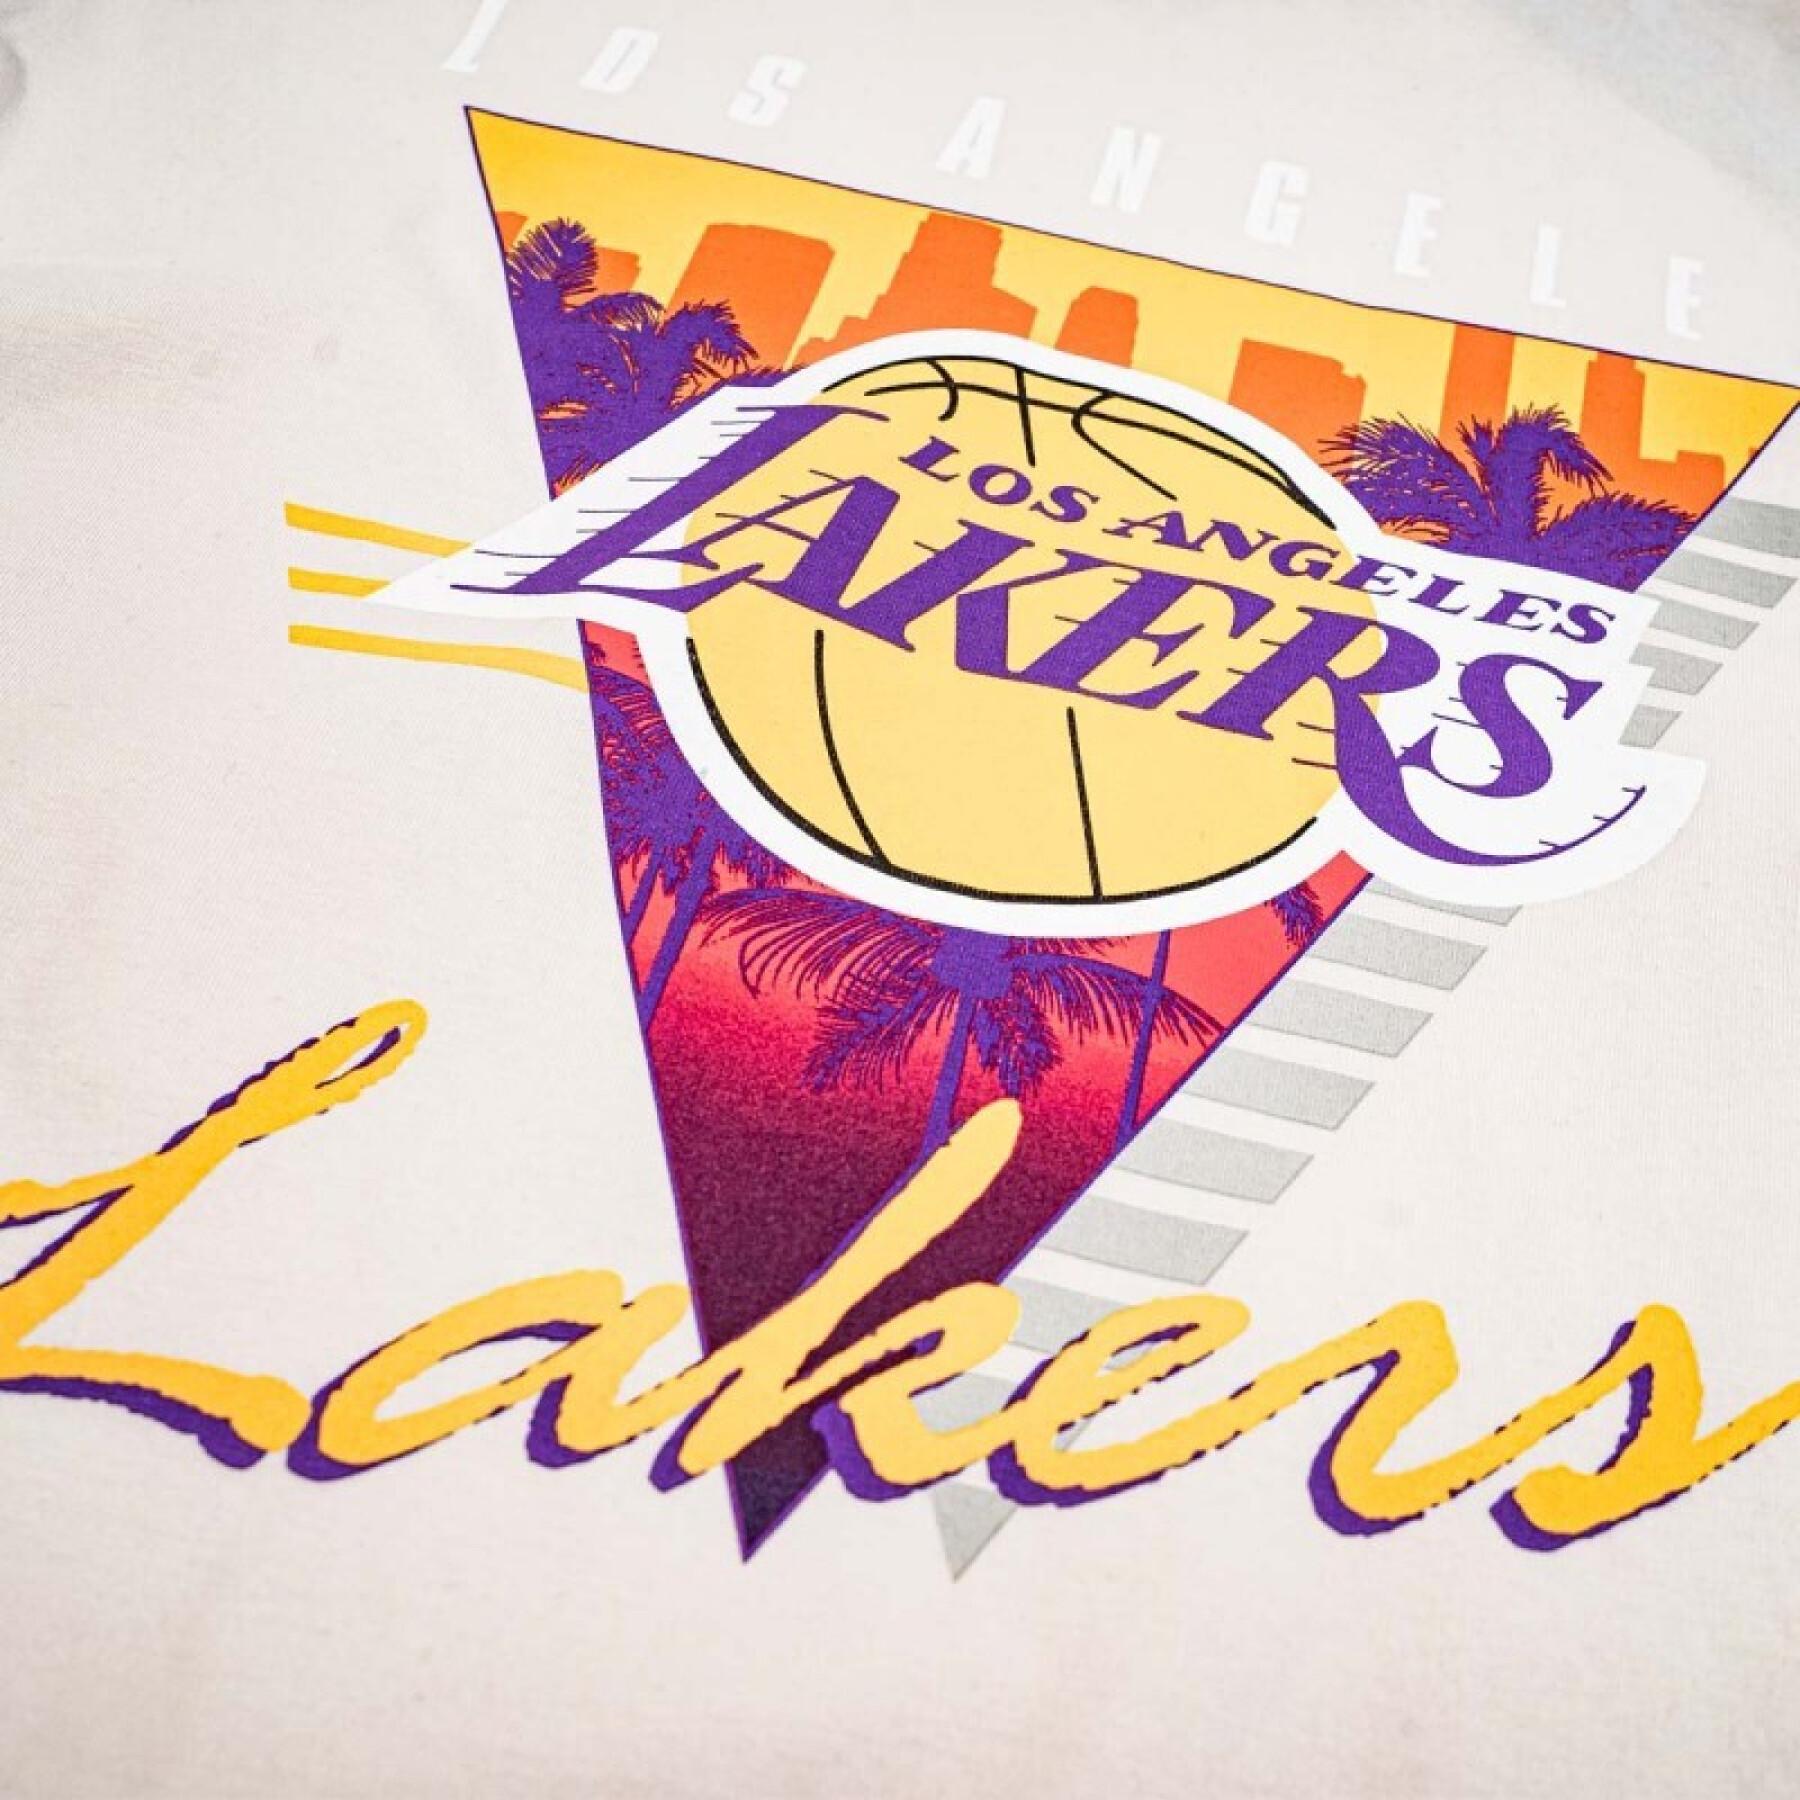 T-shirt Los Angeles Lakers NBA Final Seconds